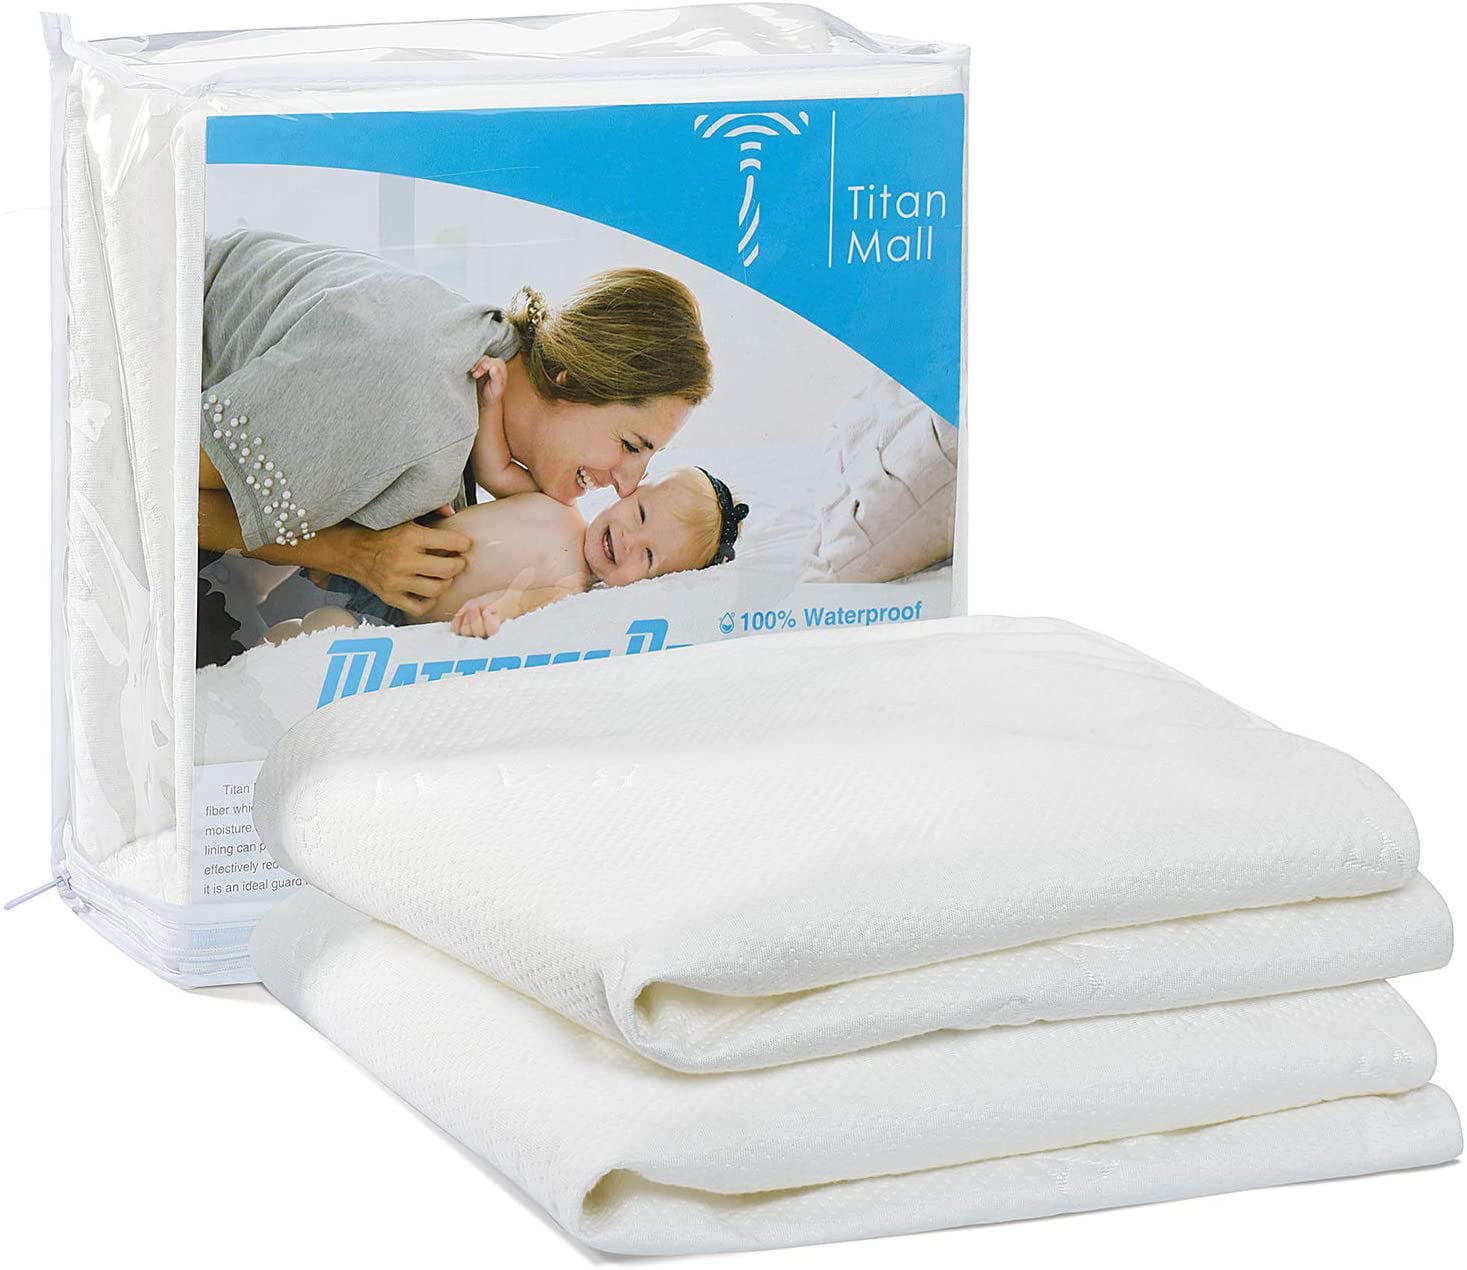 Breathable waterproof mattress protector